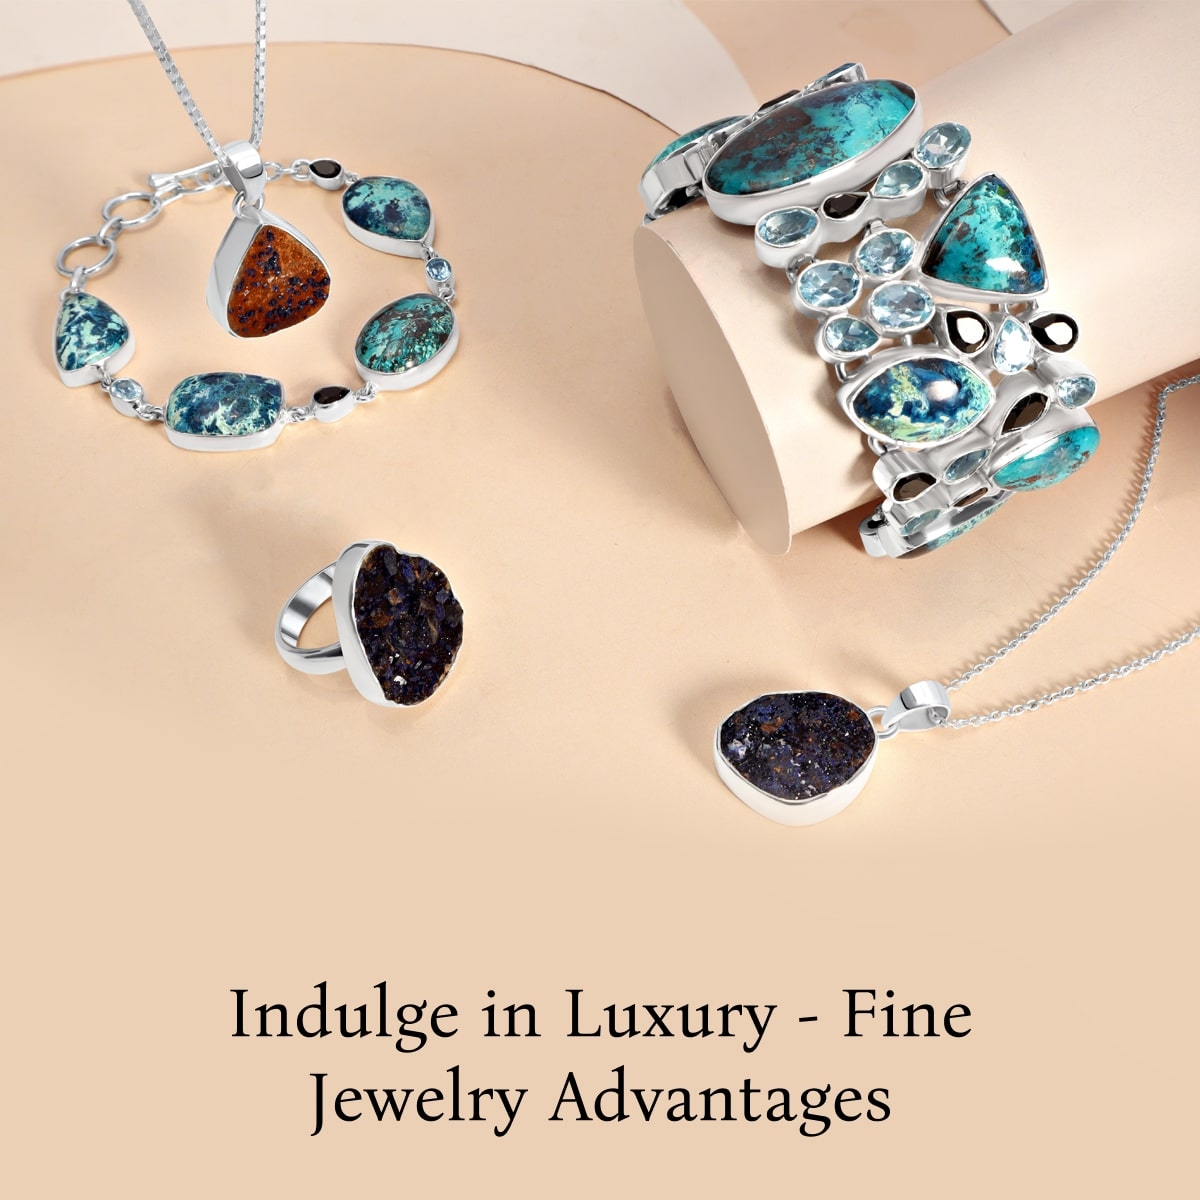 Benefits of fine jewelry